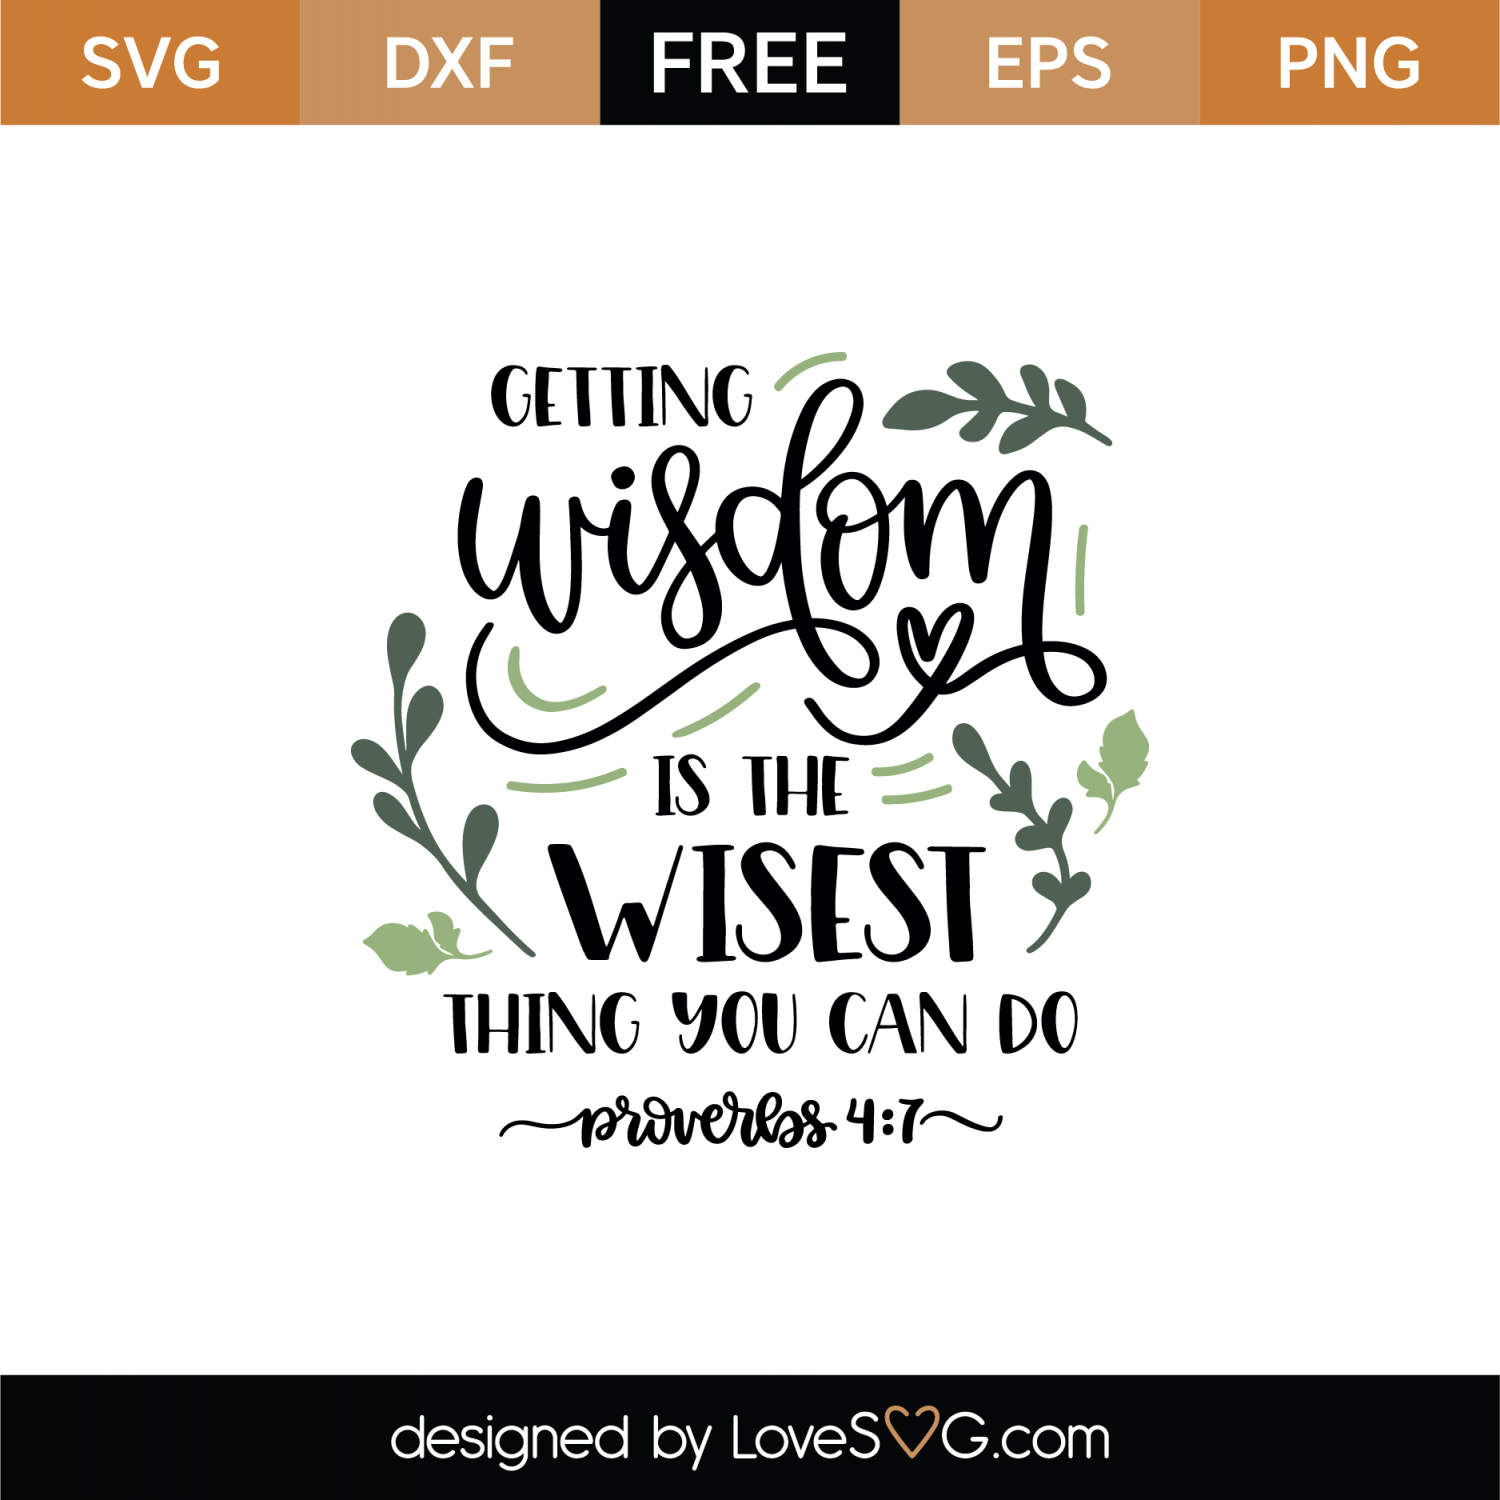 Download Free Proverbs 4:7 SVG Cut File | Lovesvg.com